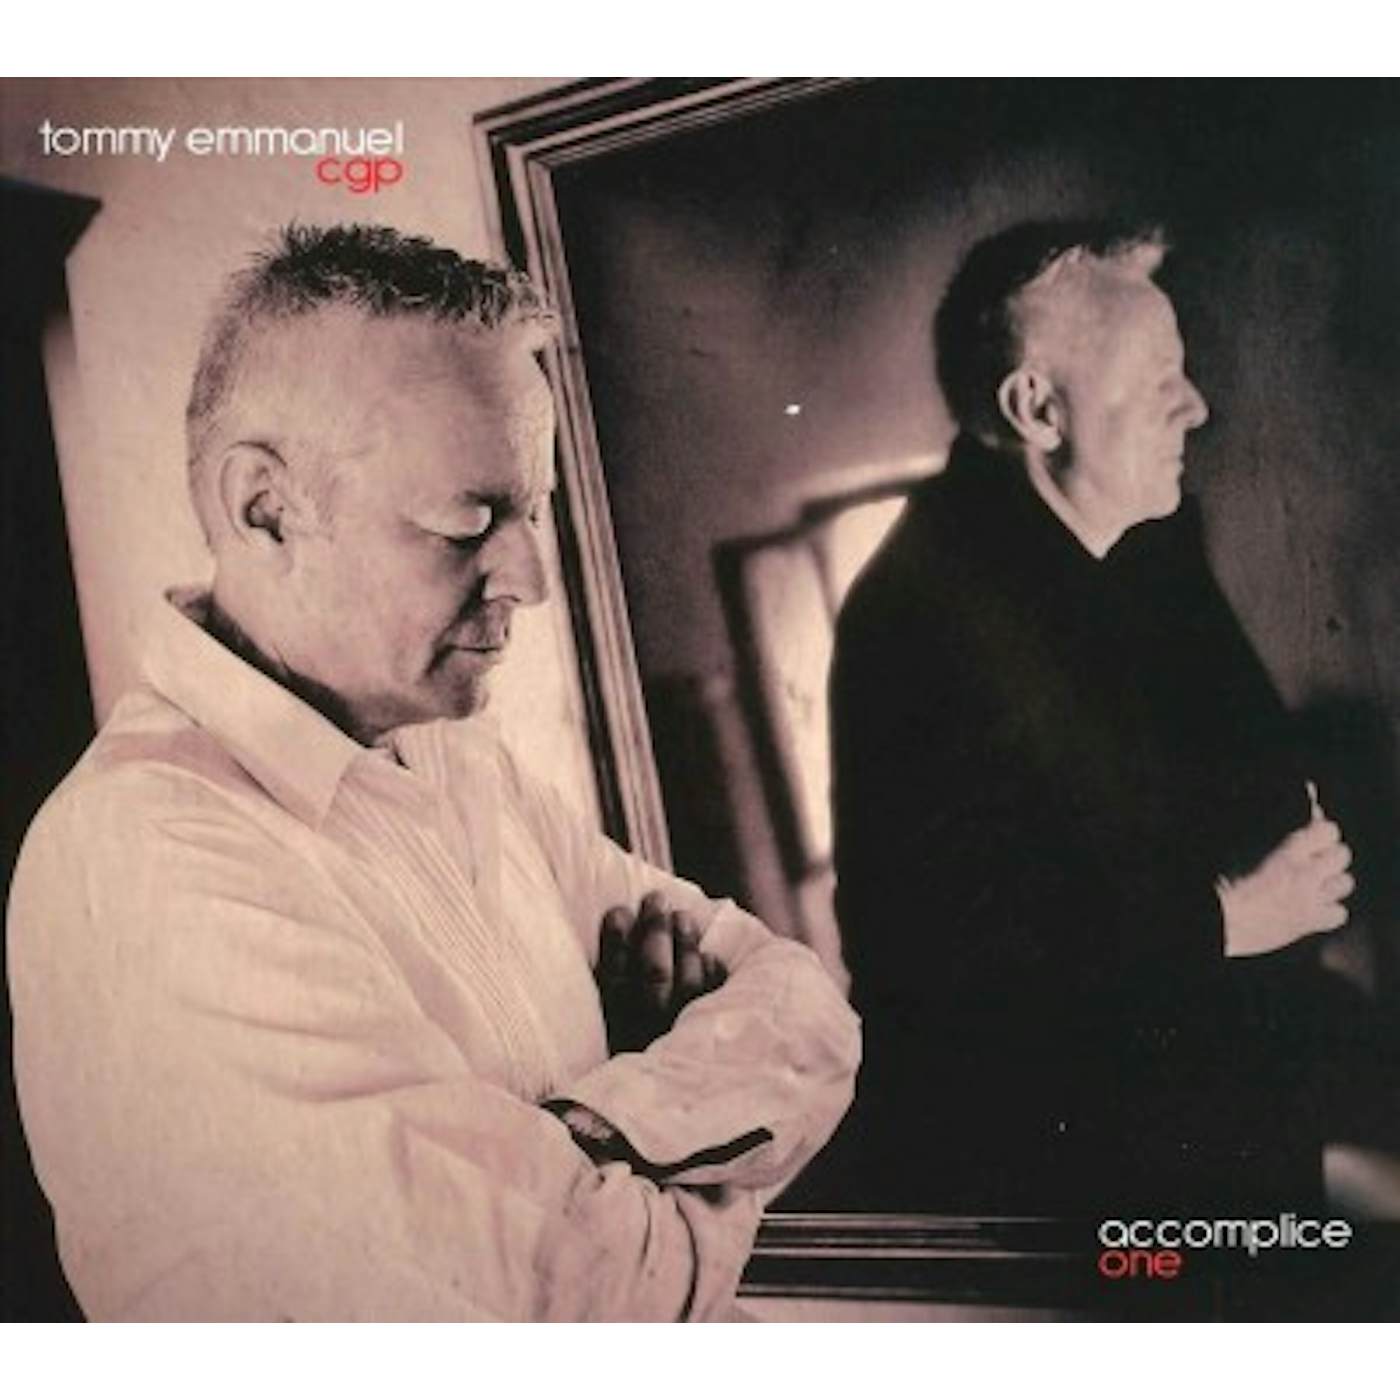 Tommy Emmanuel Accomplice One CD